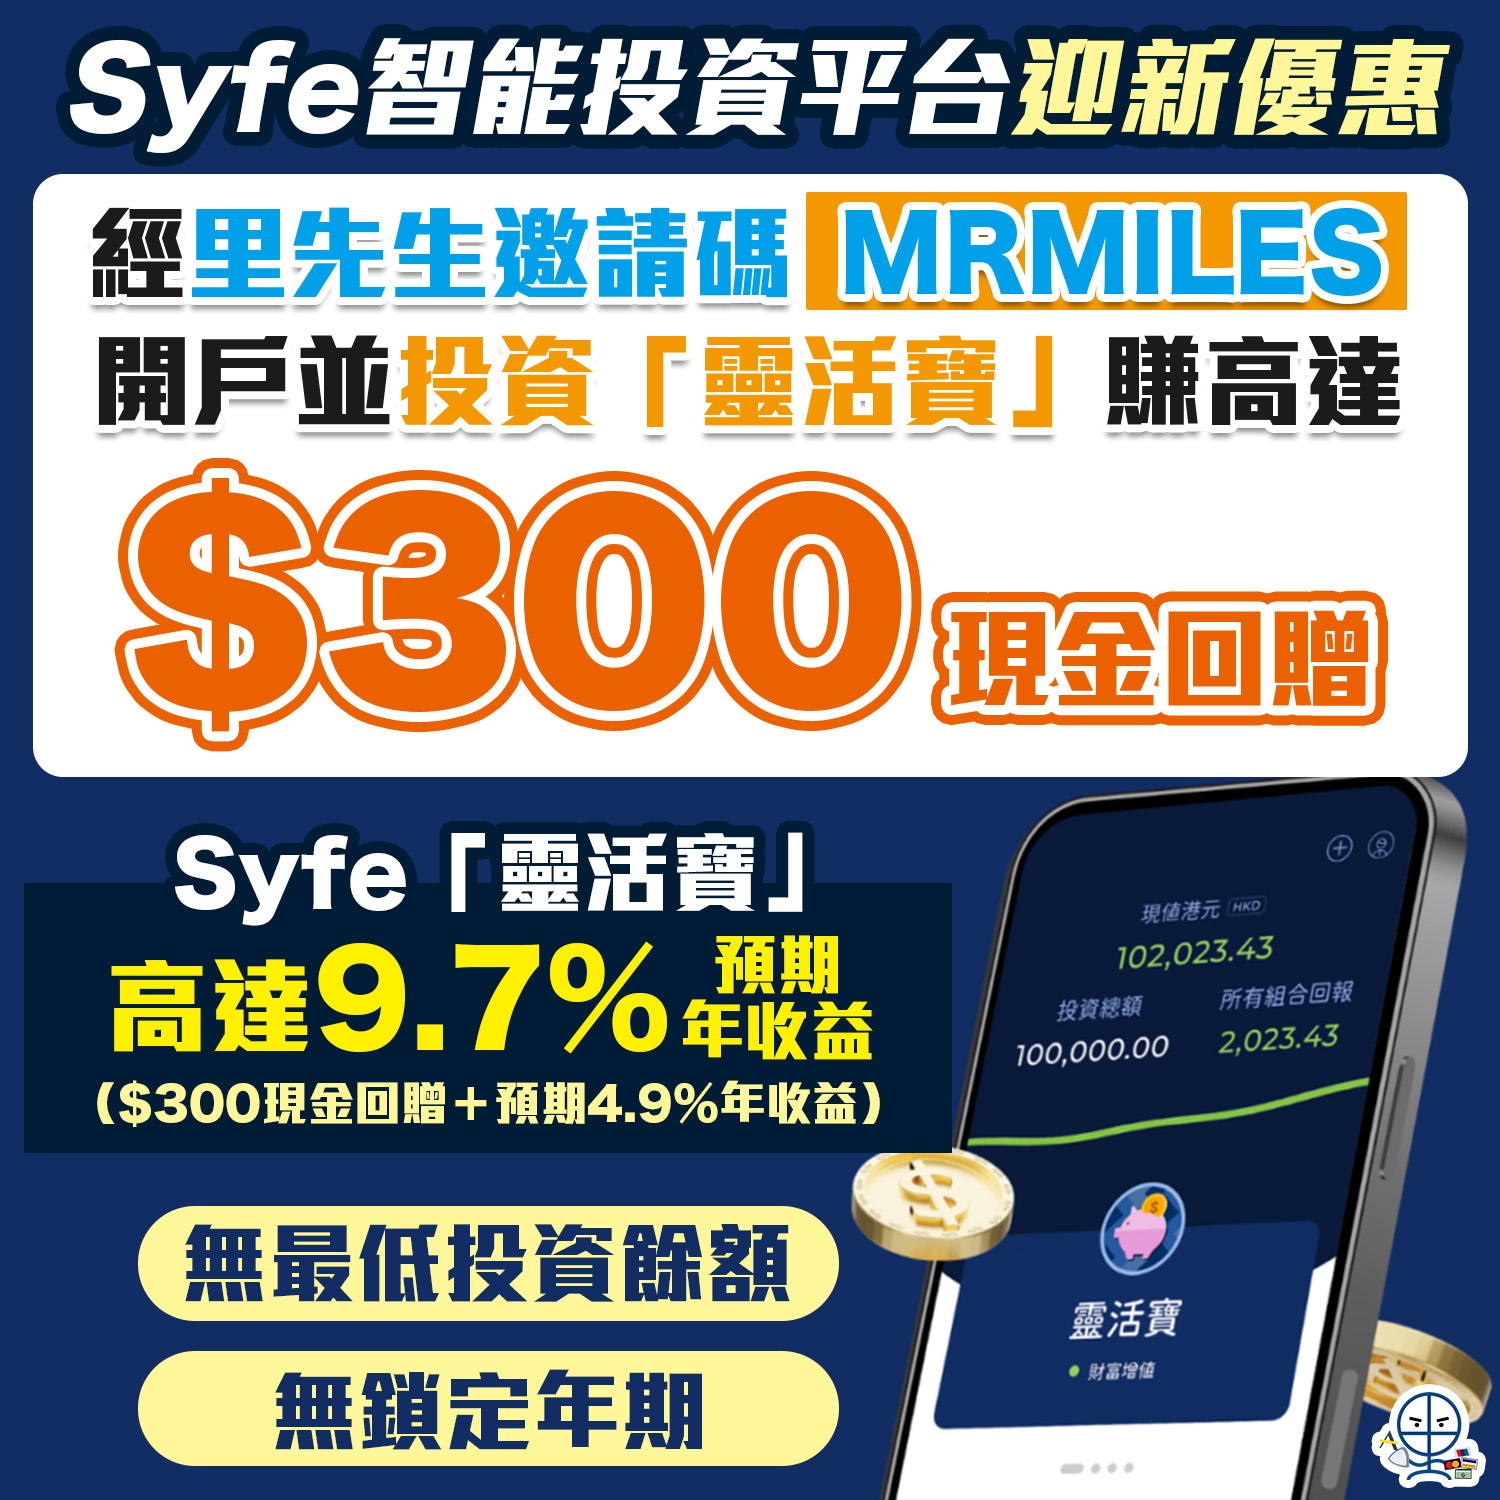 Syfe智能投資平台｜經里先生邀請碼開戶賺HK$300現金獎賞｜Syfe靈活寶高達9.7%預期年收益